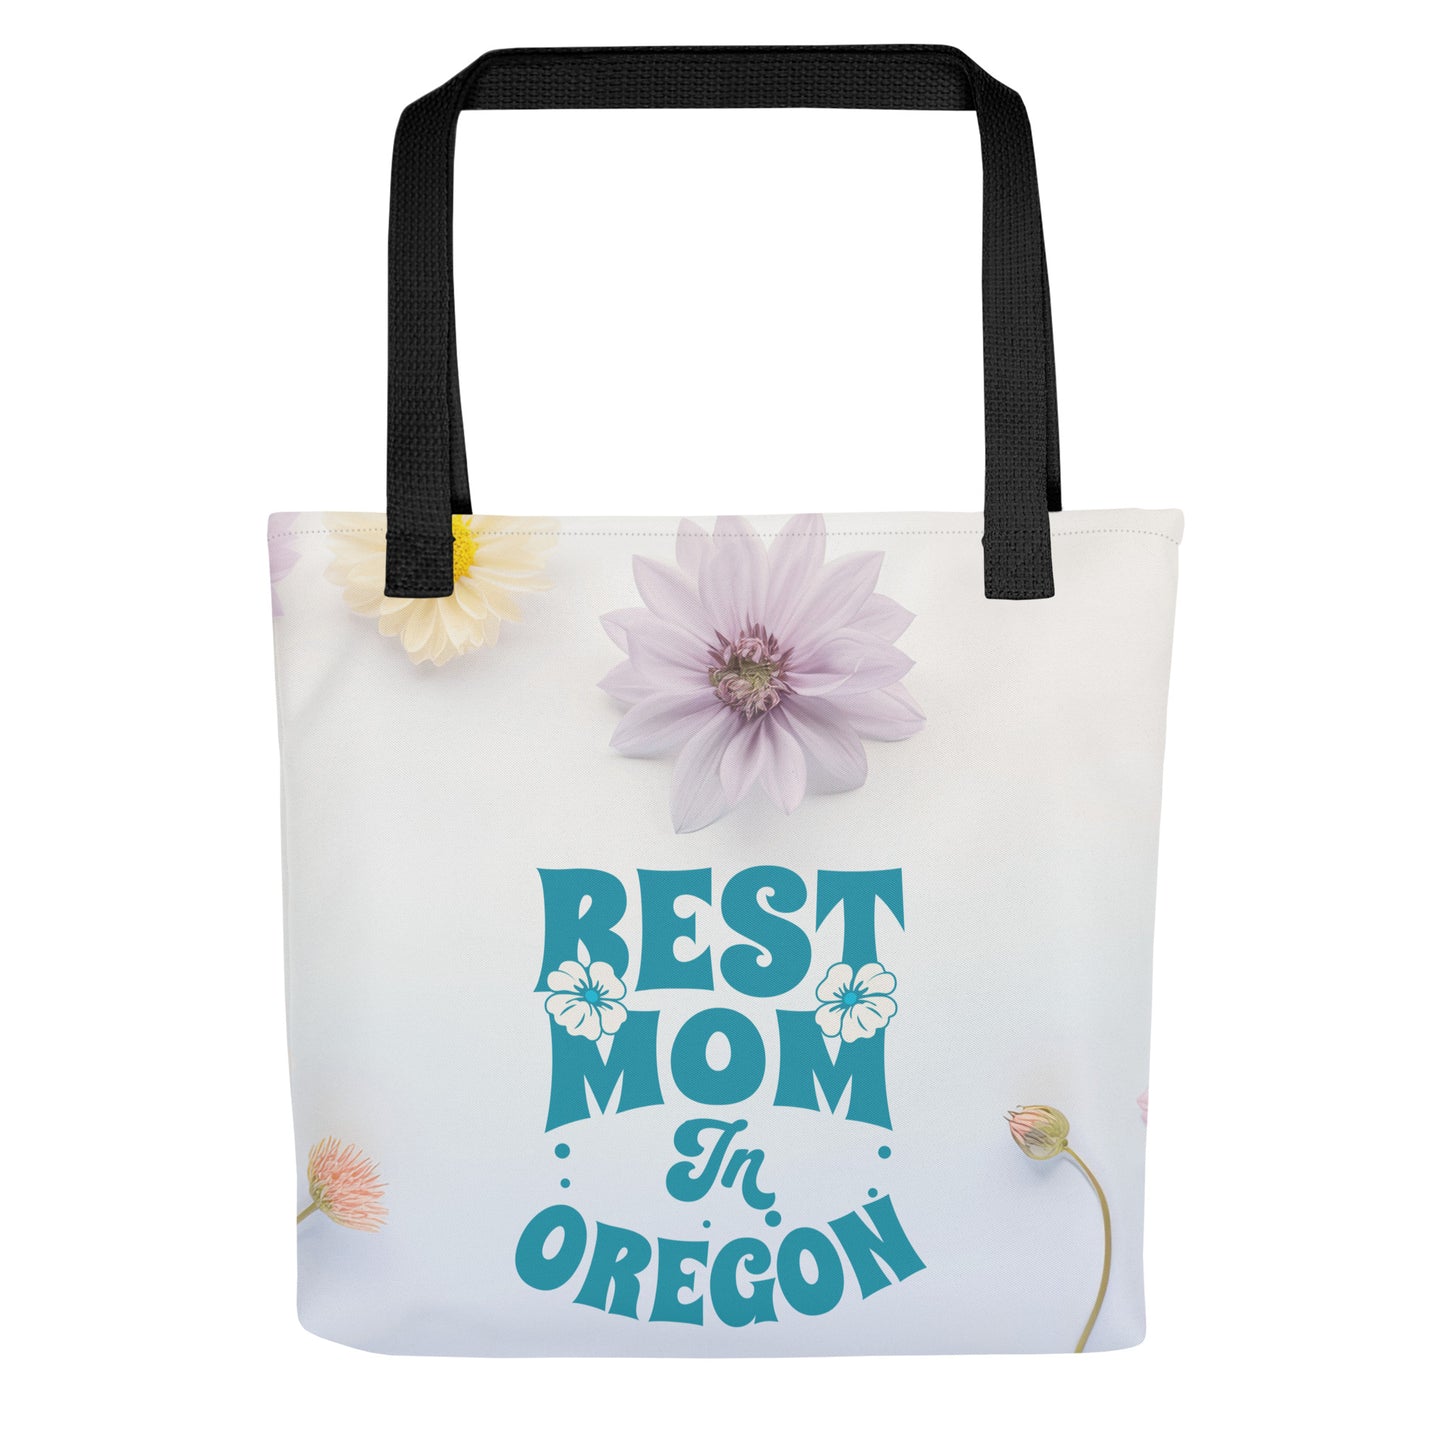 Best Mom in Oregon/2 - Tote bag